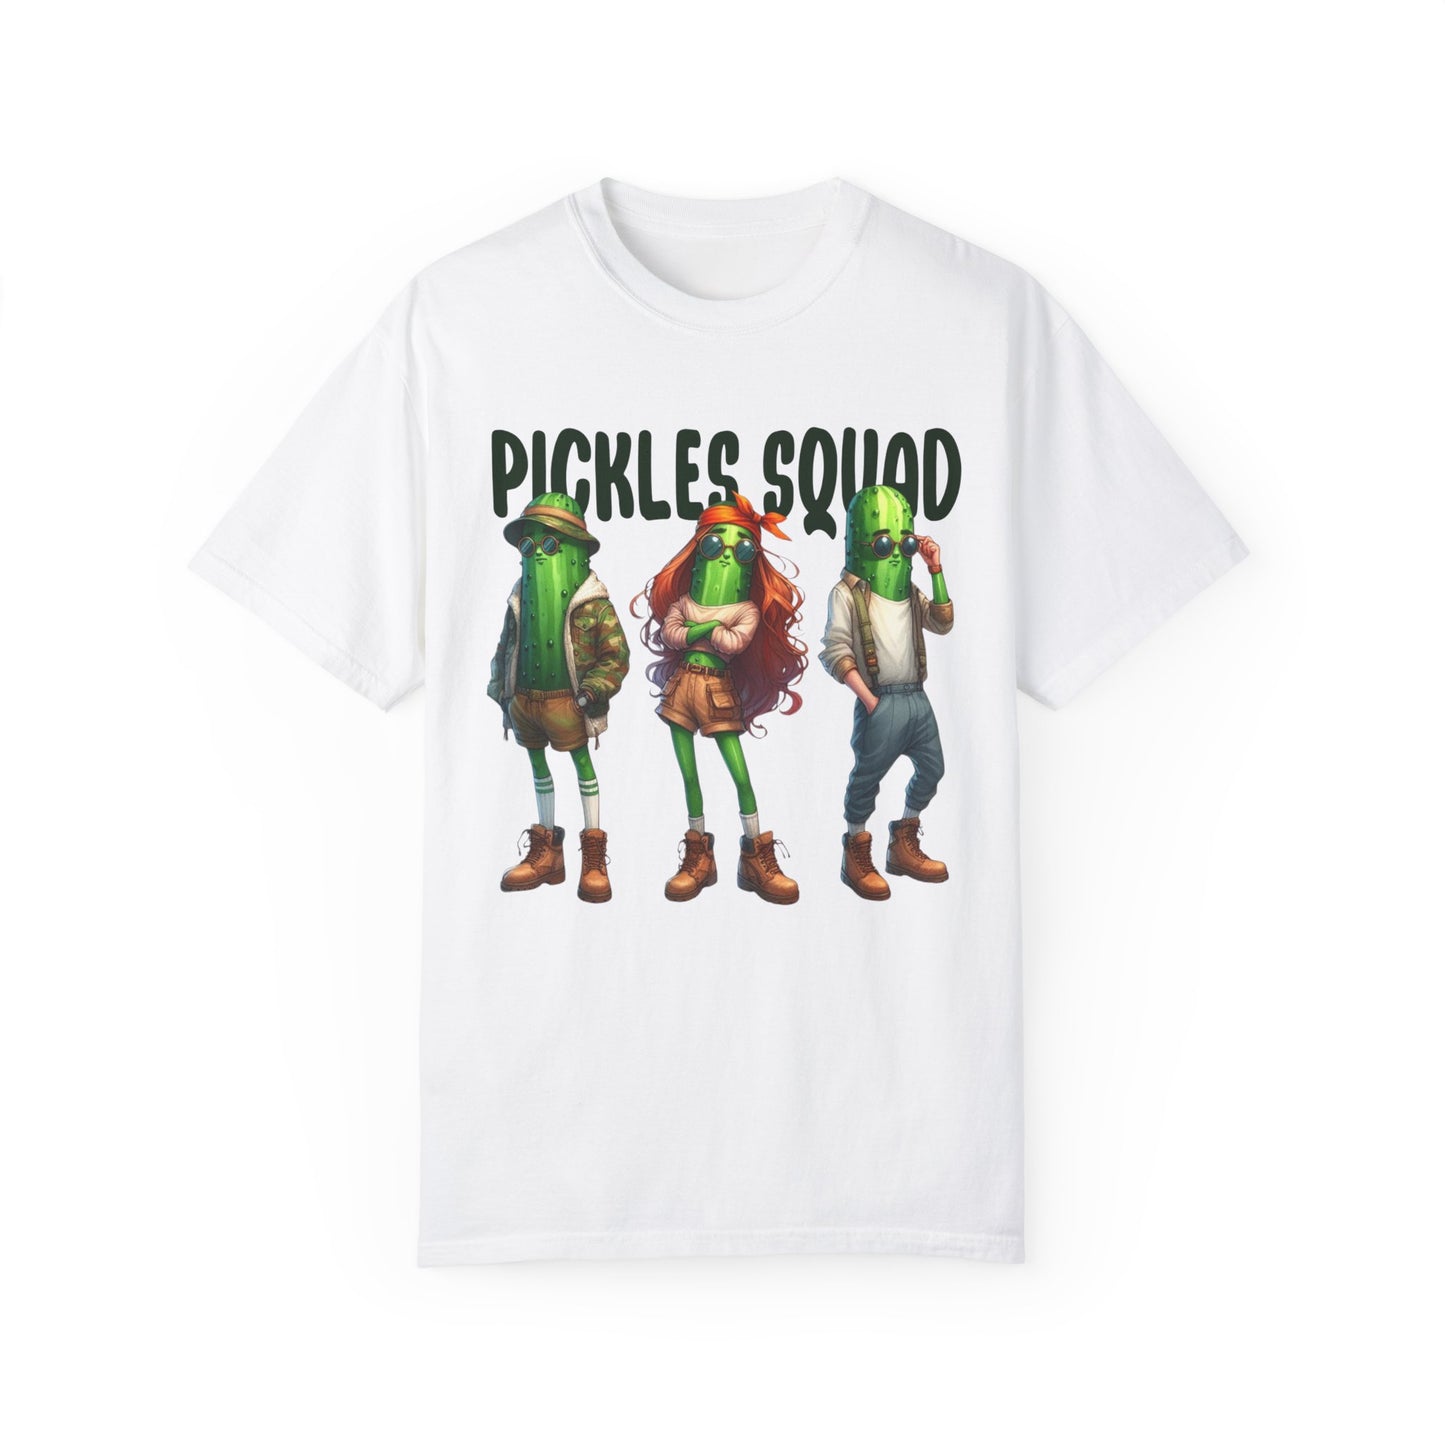 Pickles Squad